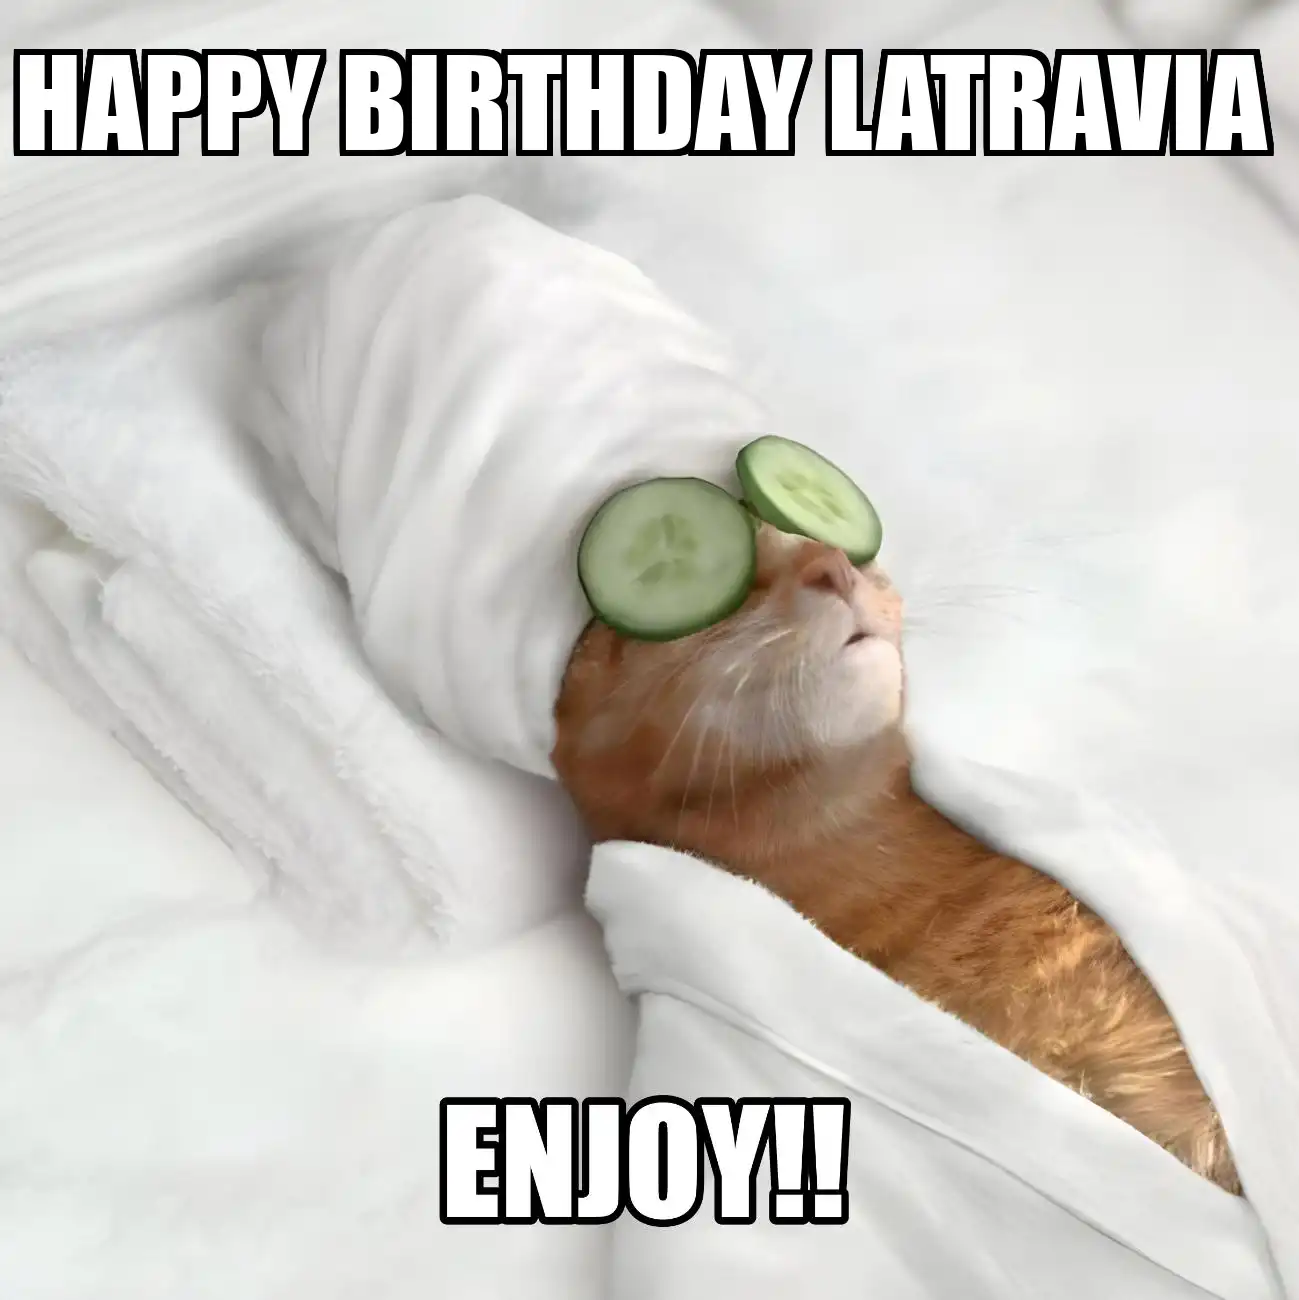 Happy Birthday Latravia Enjoy Cat Meme